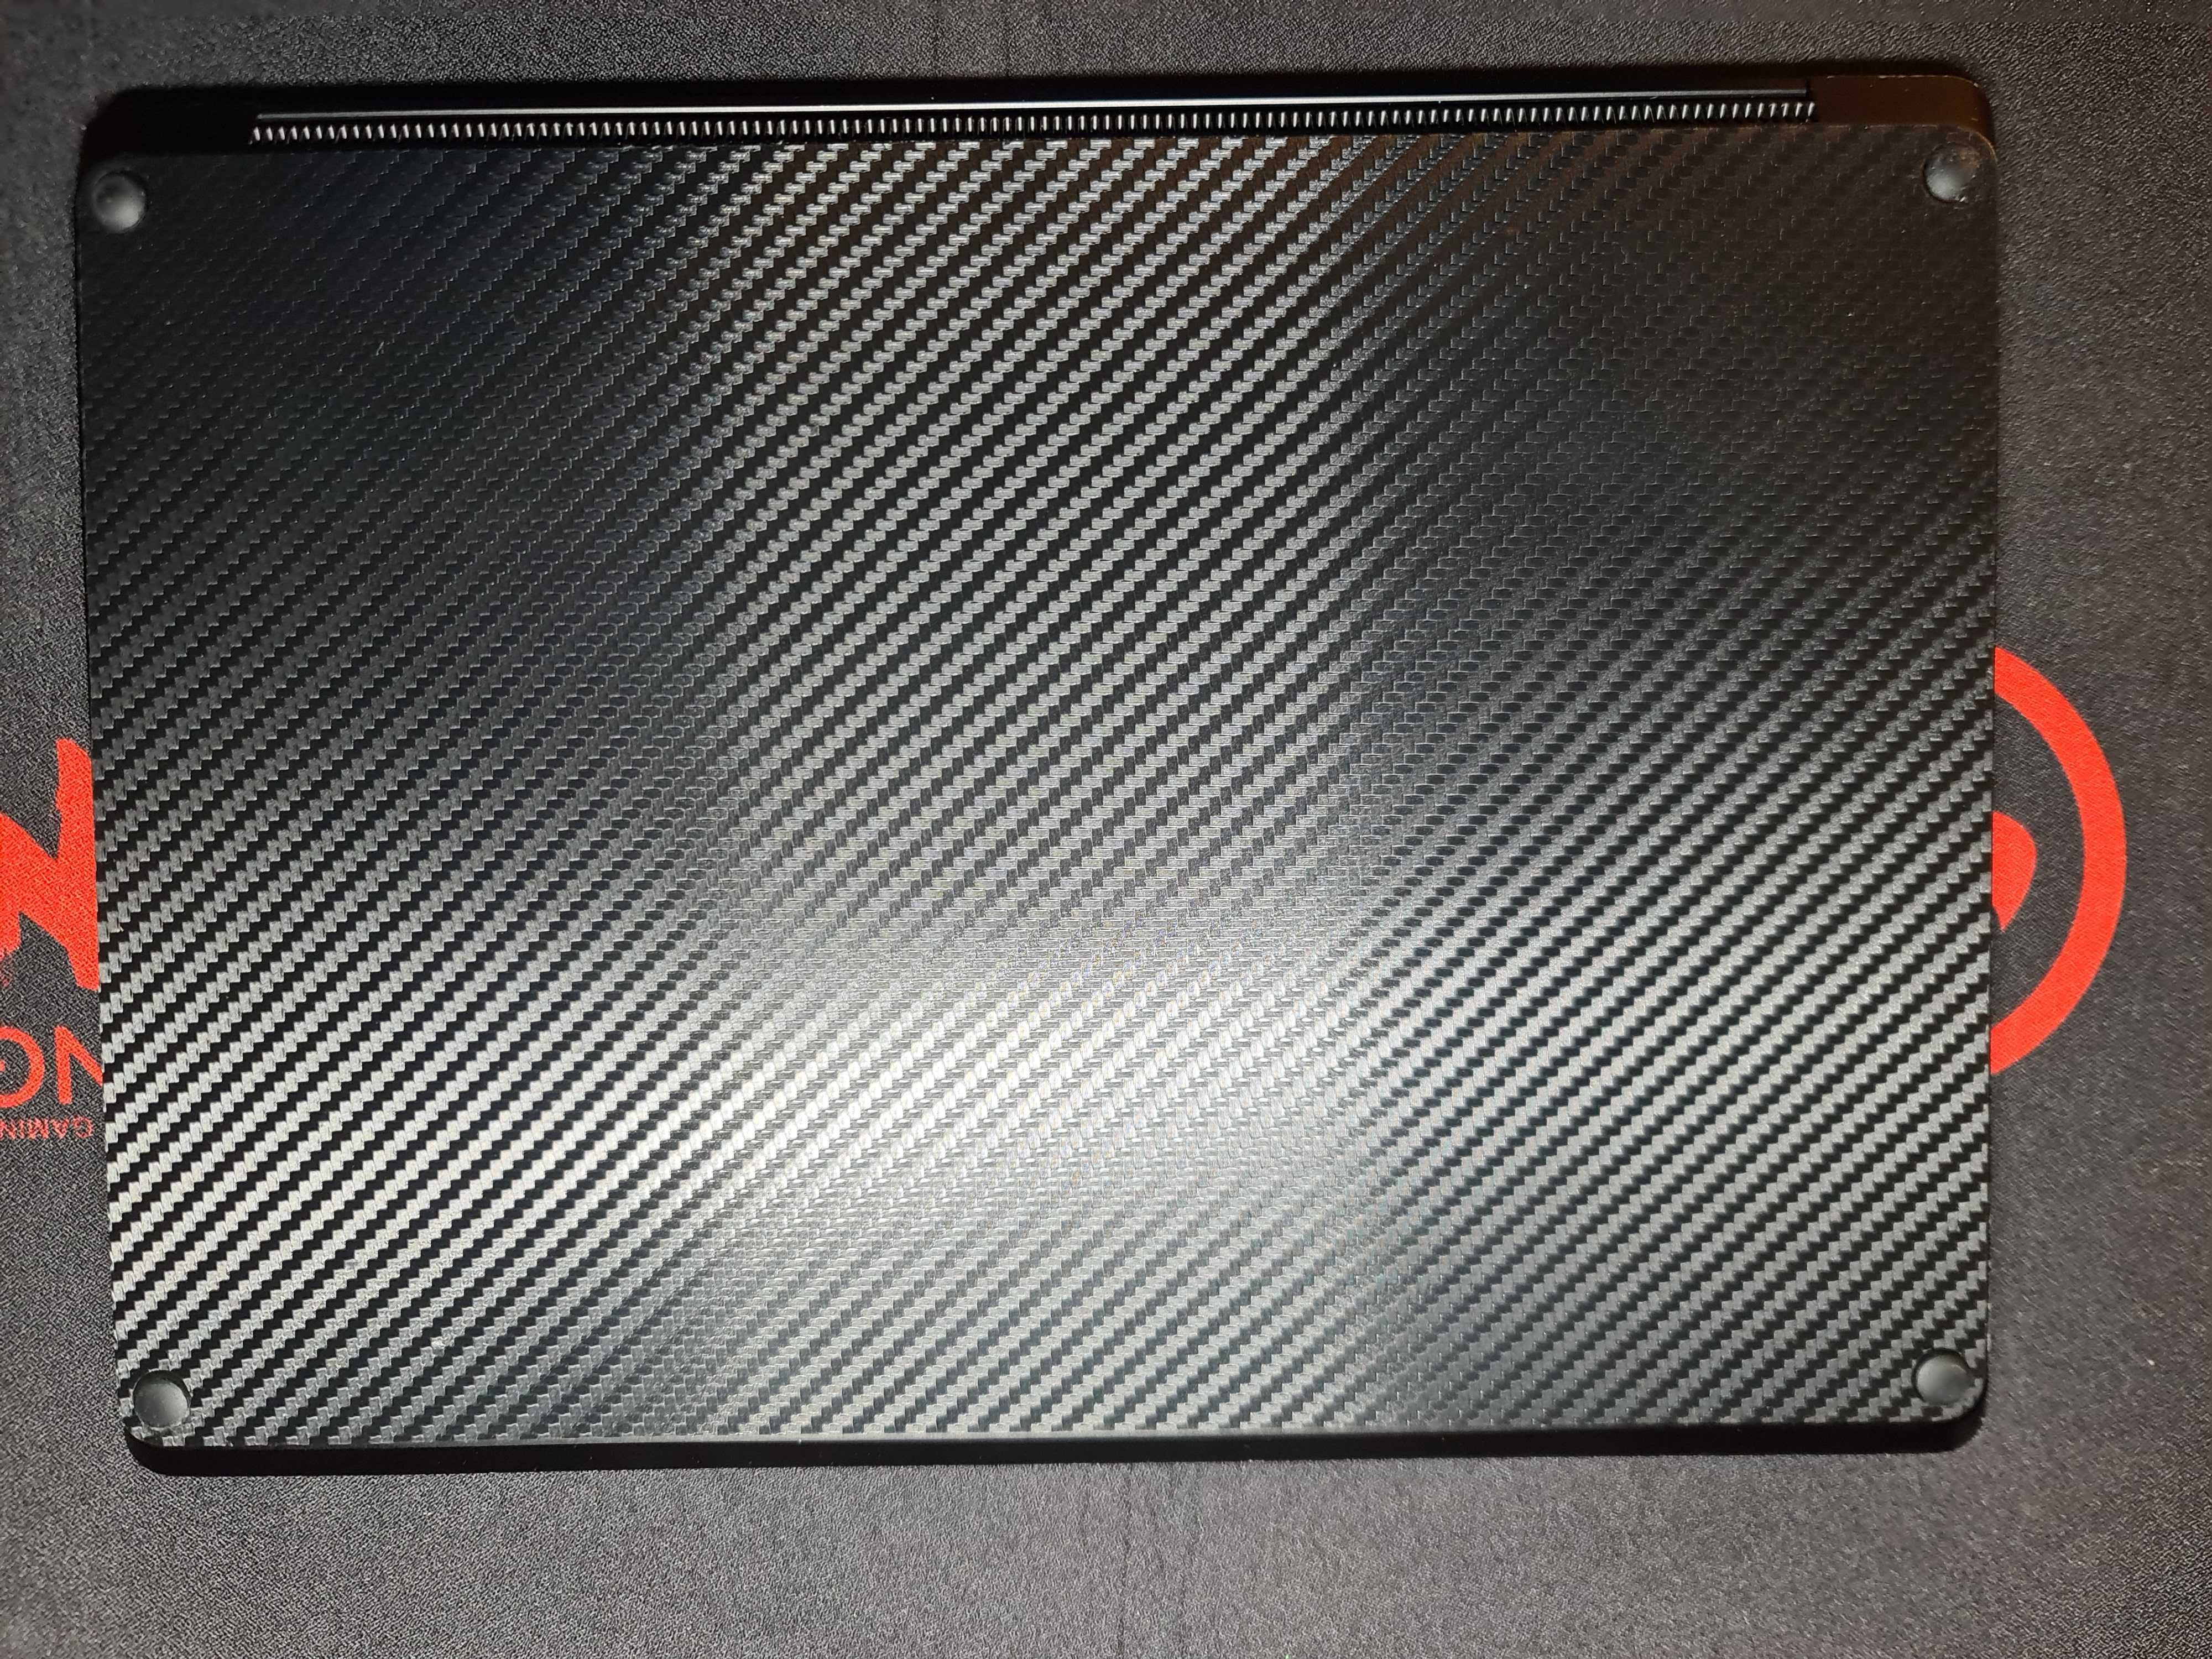 Microsoft Surface Laptop 3 - 13.5" Black - i5 / 8GB / 256GB SSD